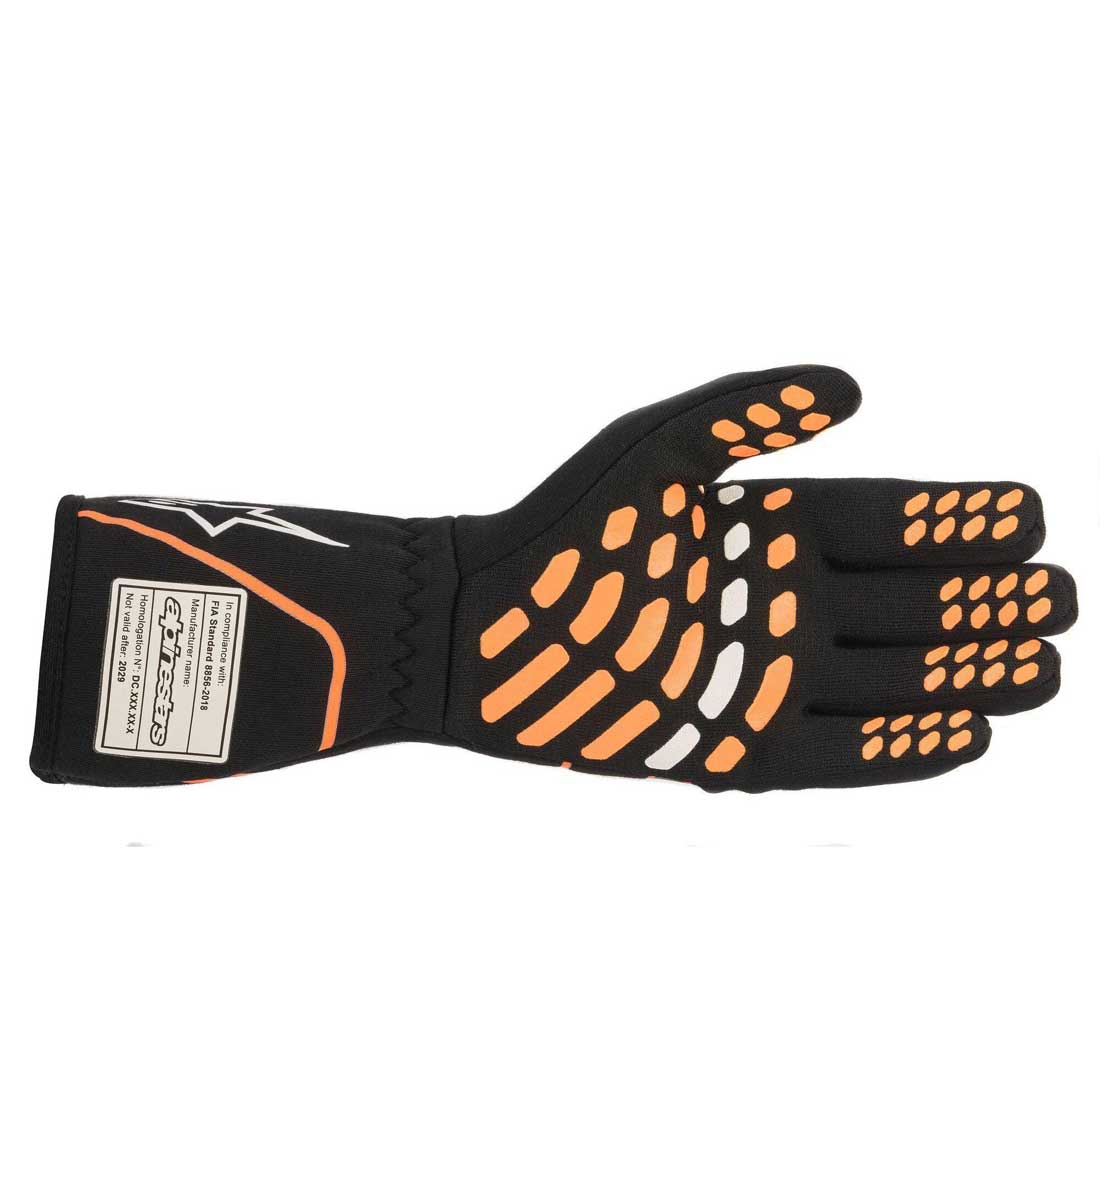 Alpinestars Tech-1 Race  v2 Gloves - Black/Orange Fluo